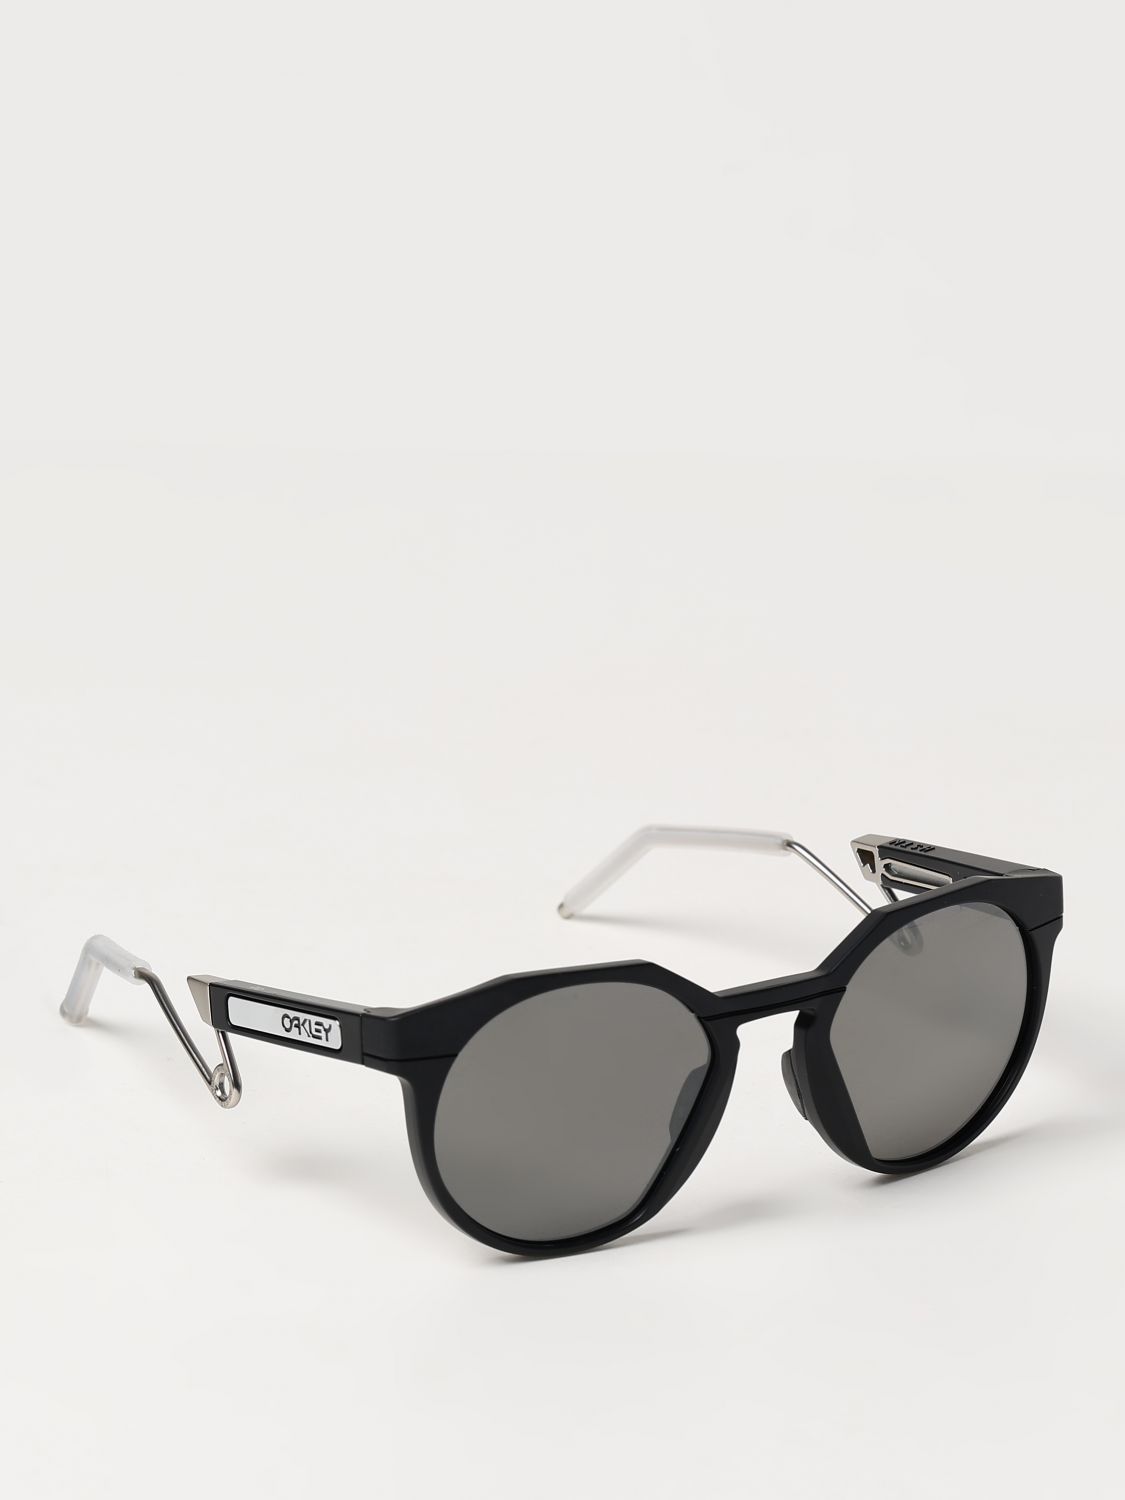 Sunglasses OAKLEY Men colour Black - Size: 52 - male